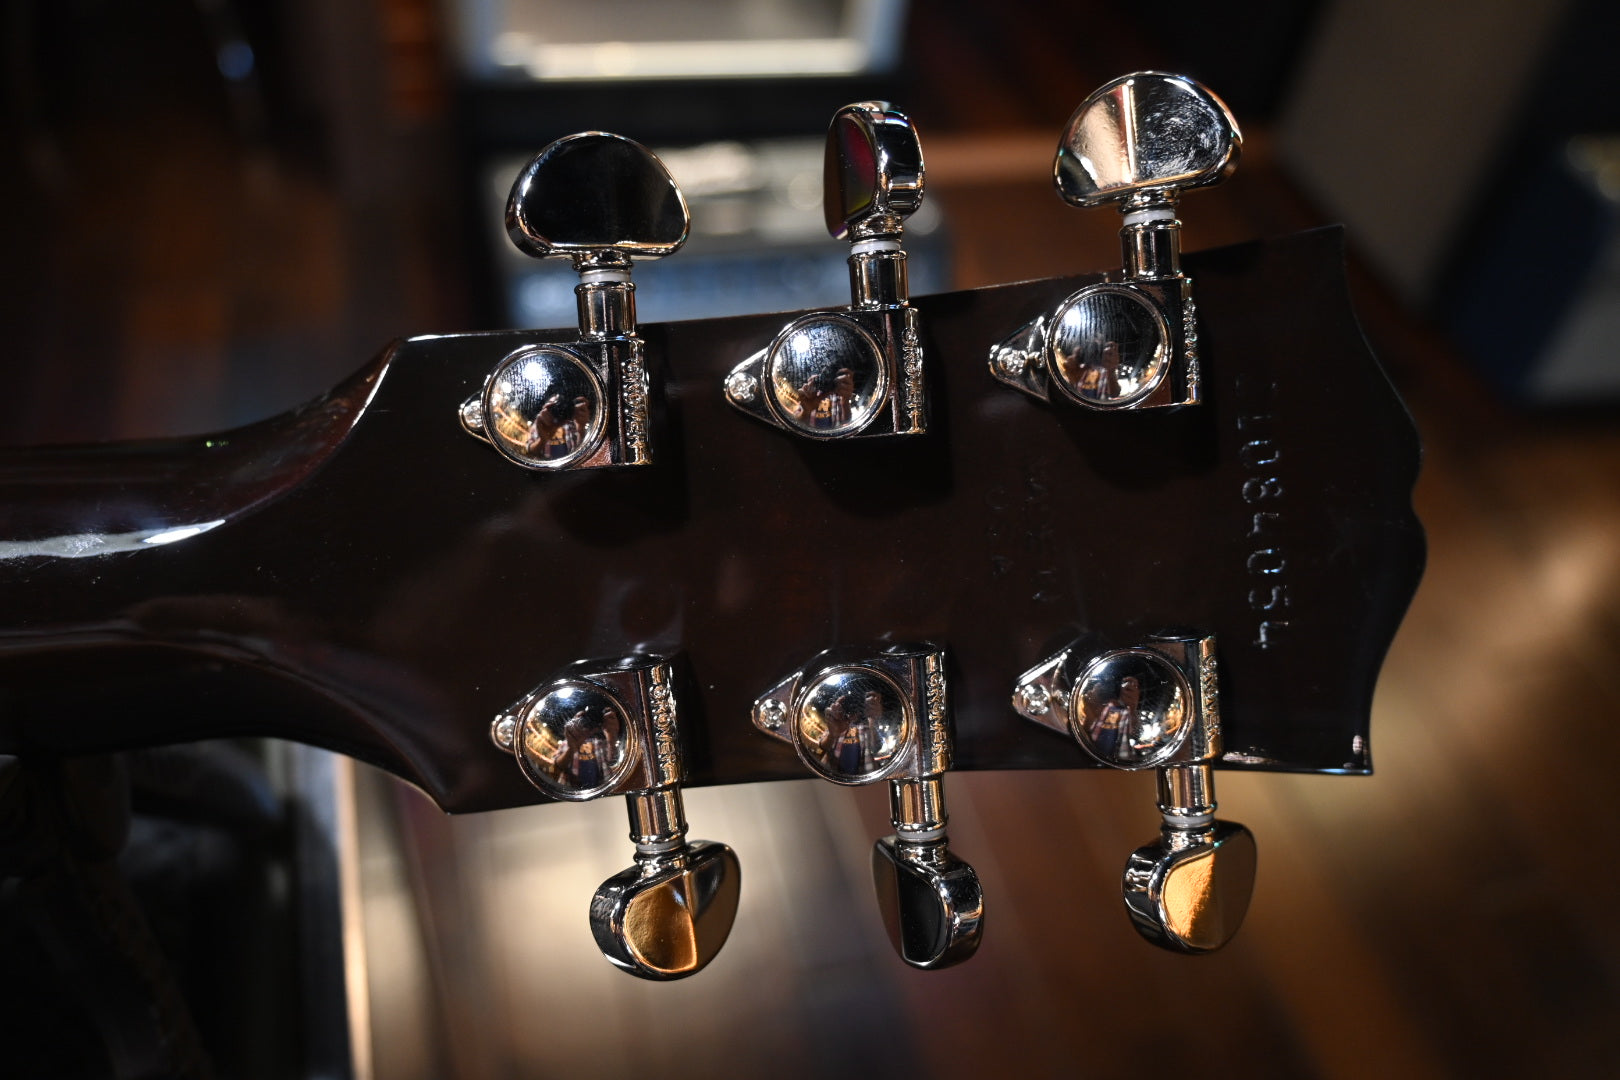 Gibson J-45 Standard Left-Handed - Vintage Sunburst Guitar #4054 - Danville Music